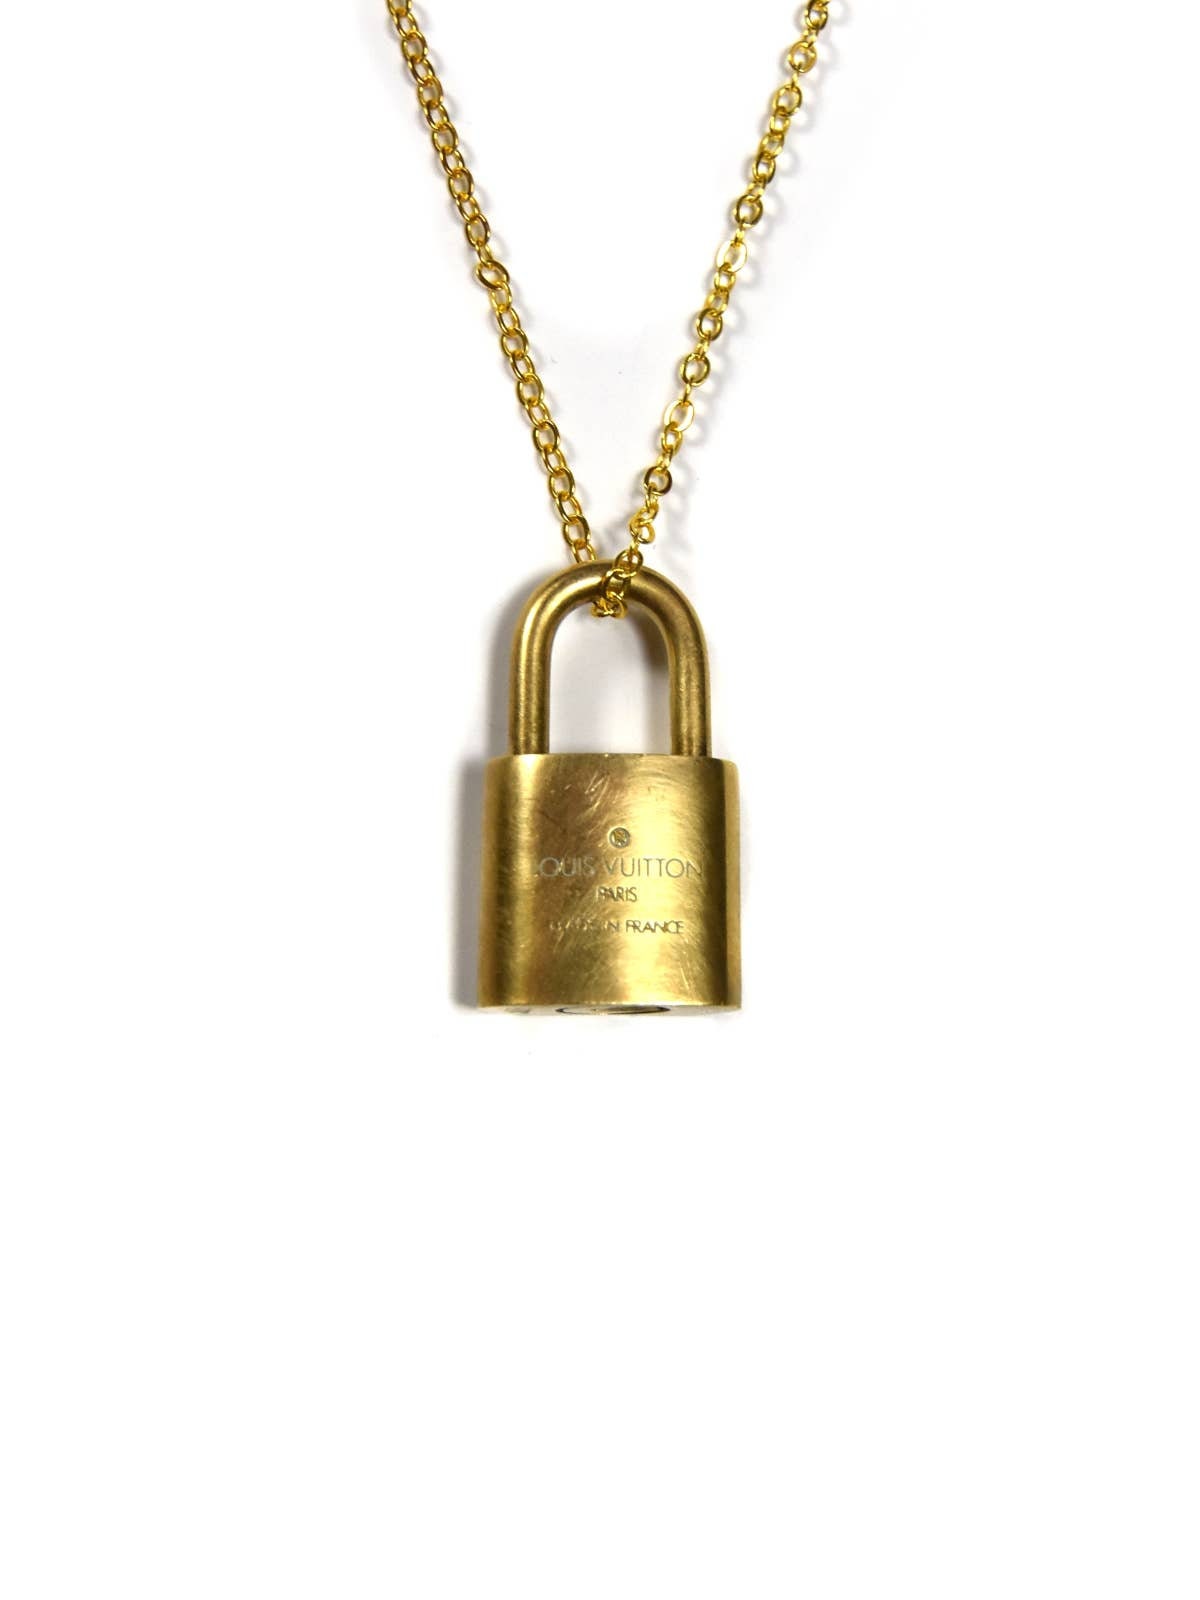 vuitton padlock pendant